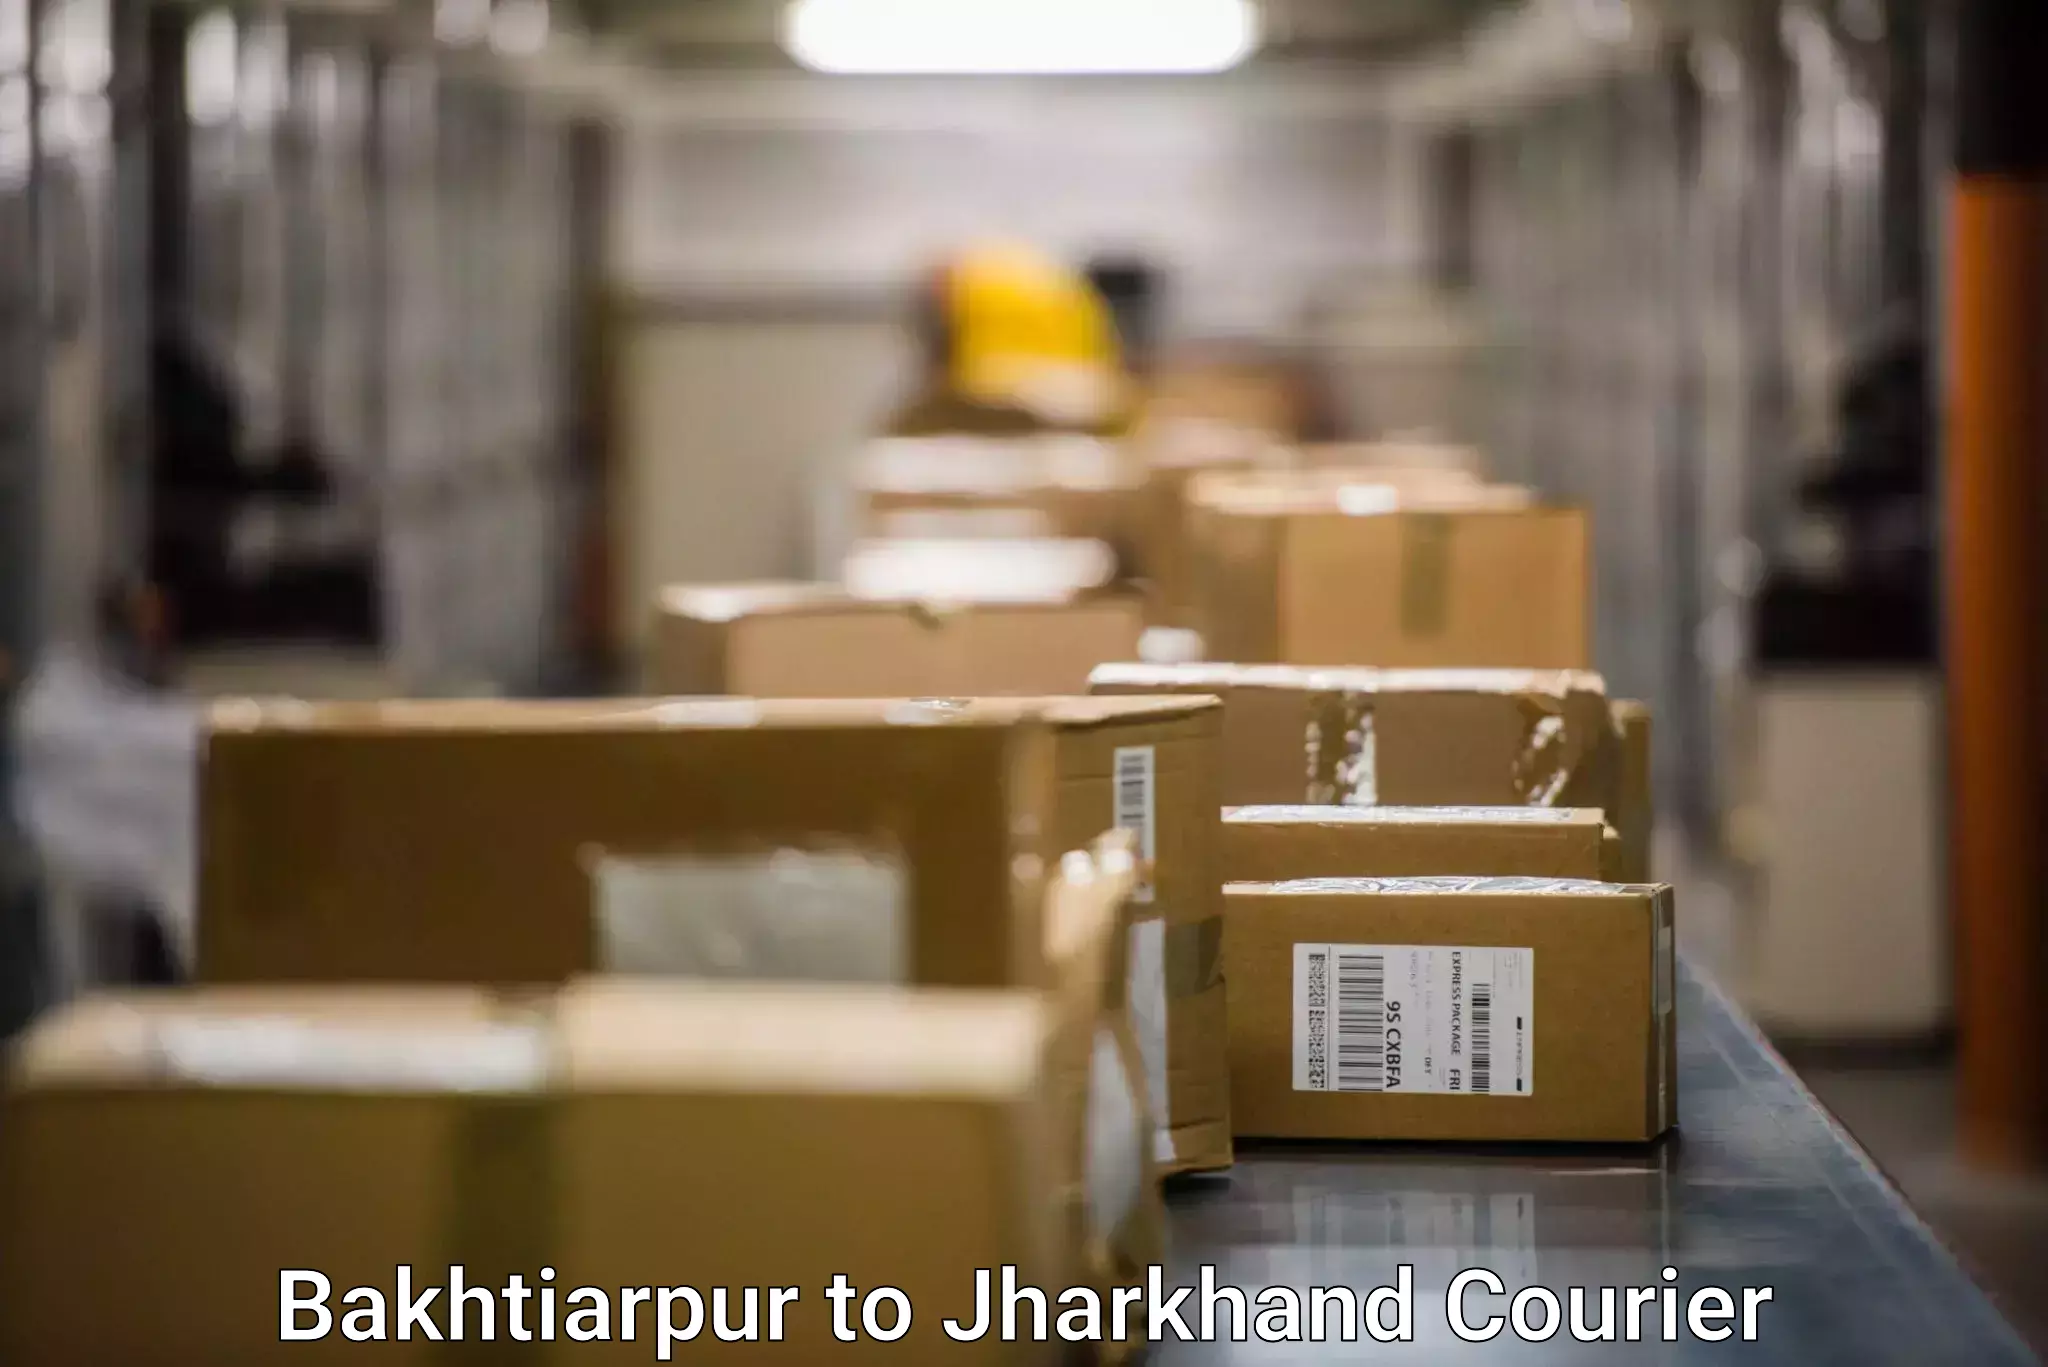 Courier service innovation Bakhtiarpur to East Singhbhum